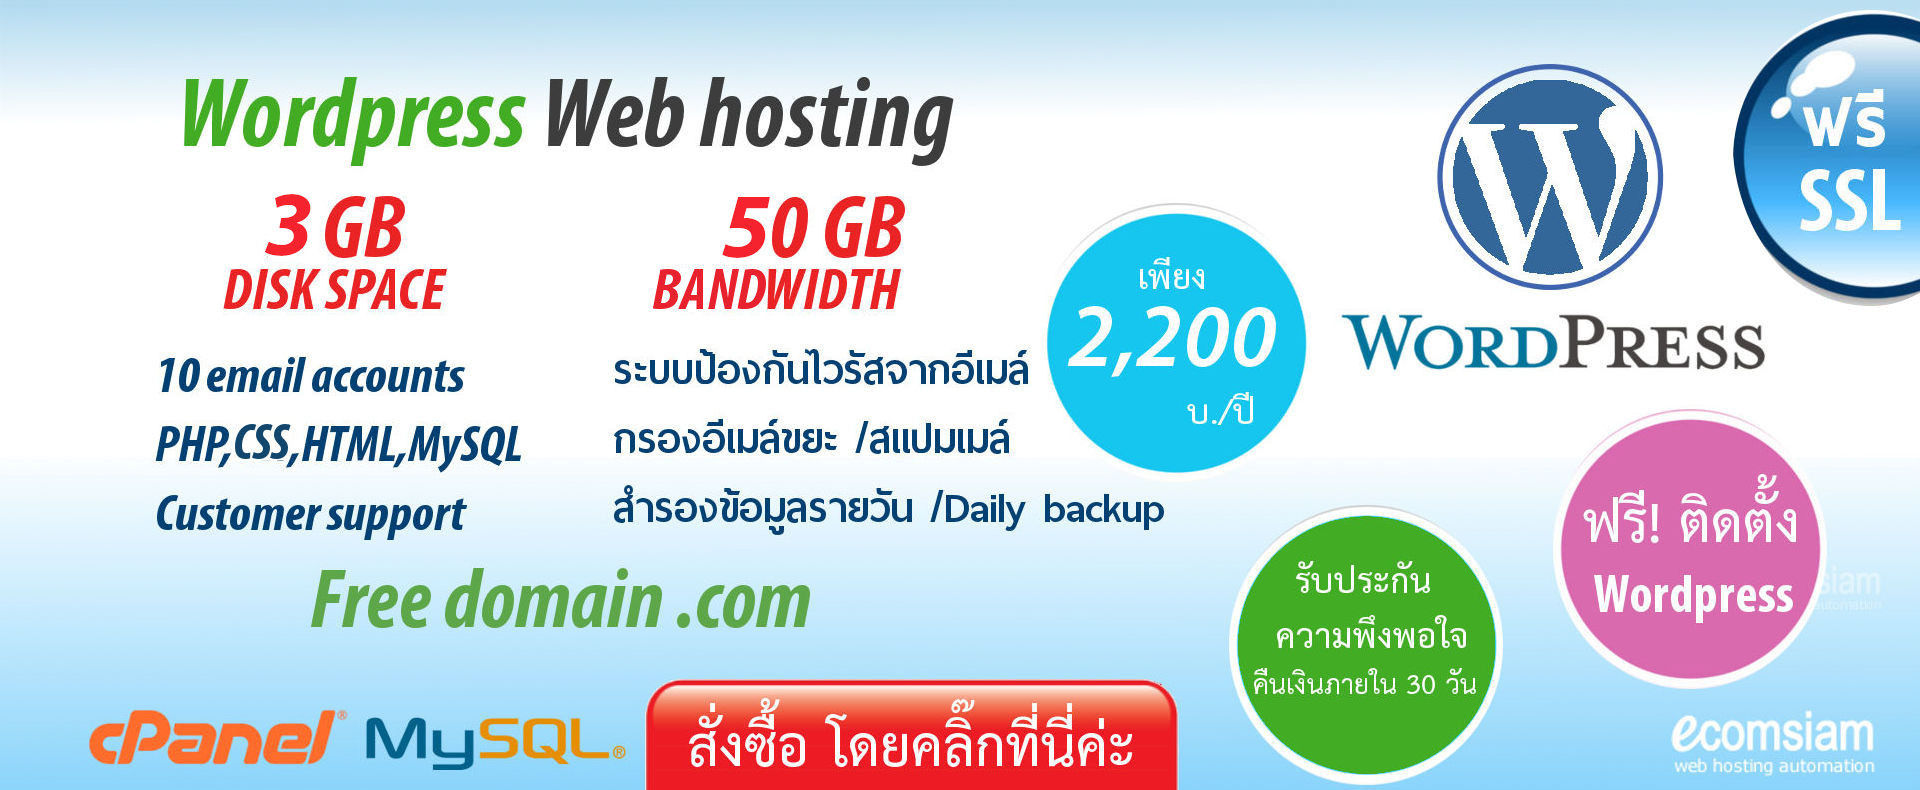 Wordpress web hosting plan เว็บโฮสติ้งไทย ฟรีโดเมน สำหรับองค์กร ที่ต้องการใช้งานเว็บไซต์และฐานข้อมูล MySql ฟรี SSL เริ่มต้นเพียง 2,200 บาทต่อปี